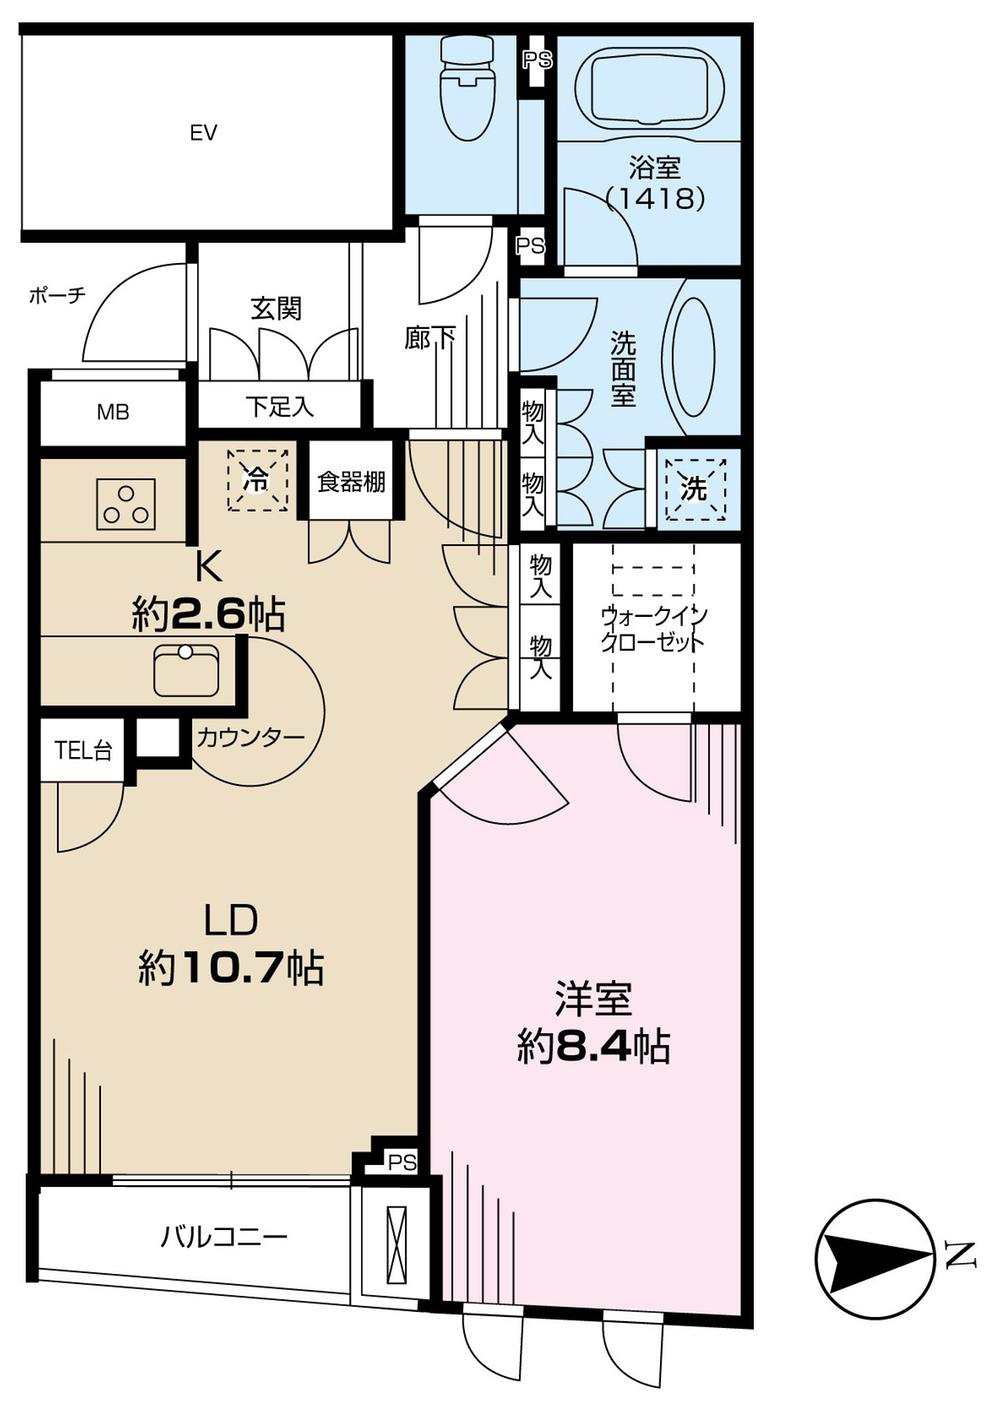 Floor plan. 1LDK, Price 41,500,000 yen, Occupied area 54.73 sq m , Balcony area 3 sq m